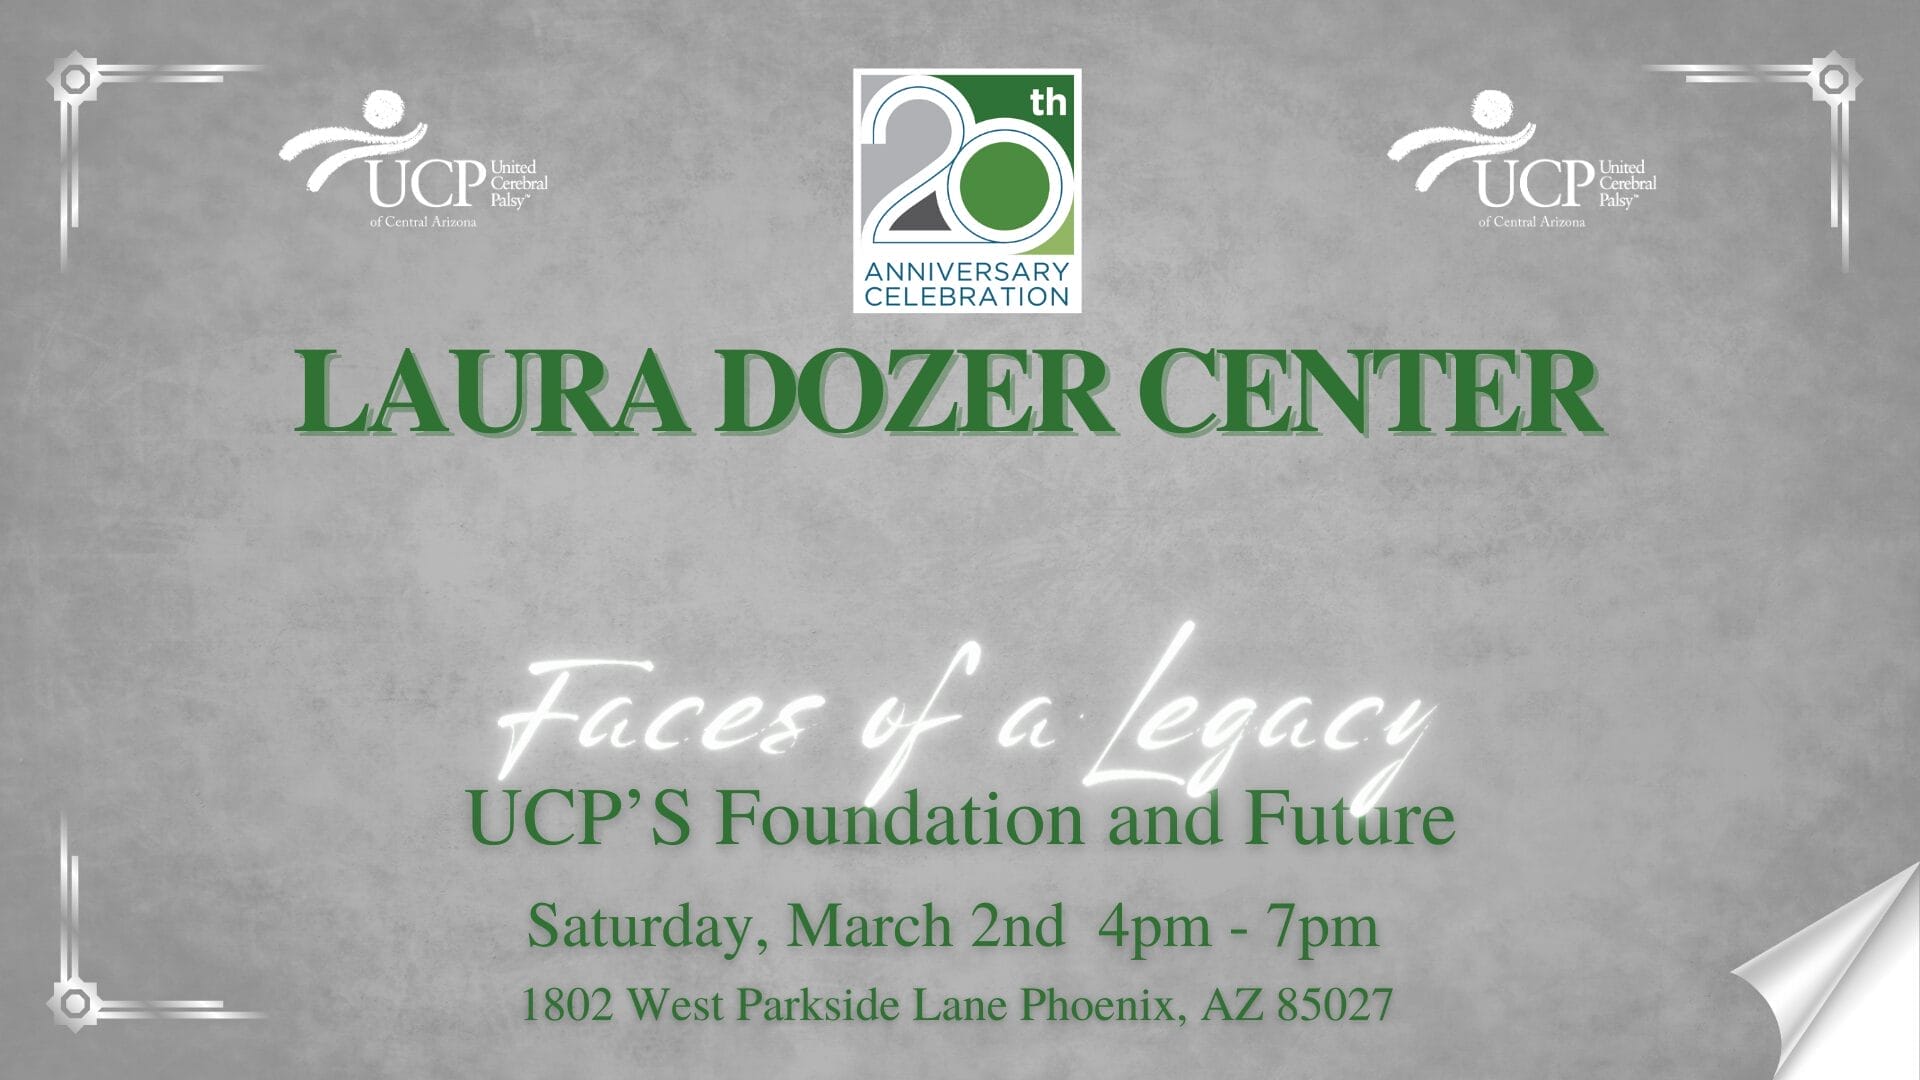 Laura dozer 20 year anniversary event invite